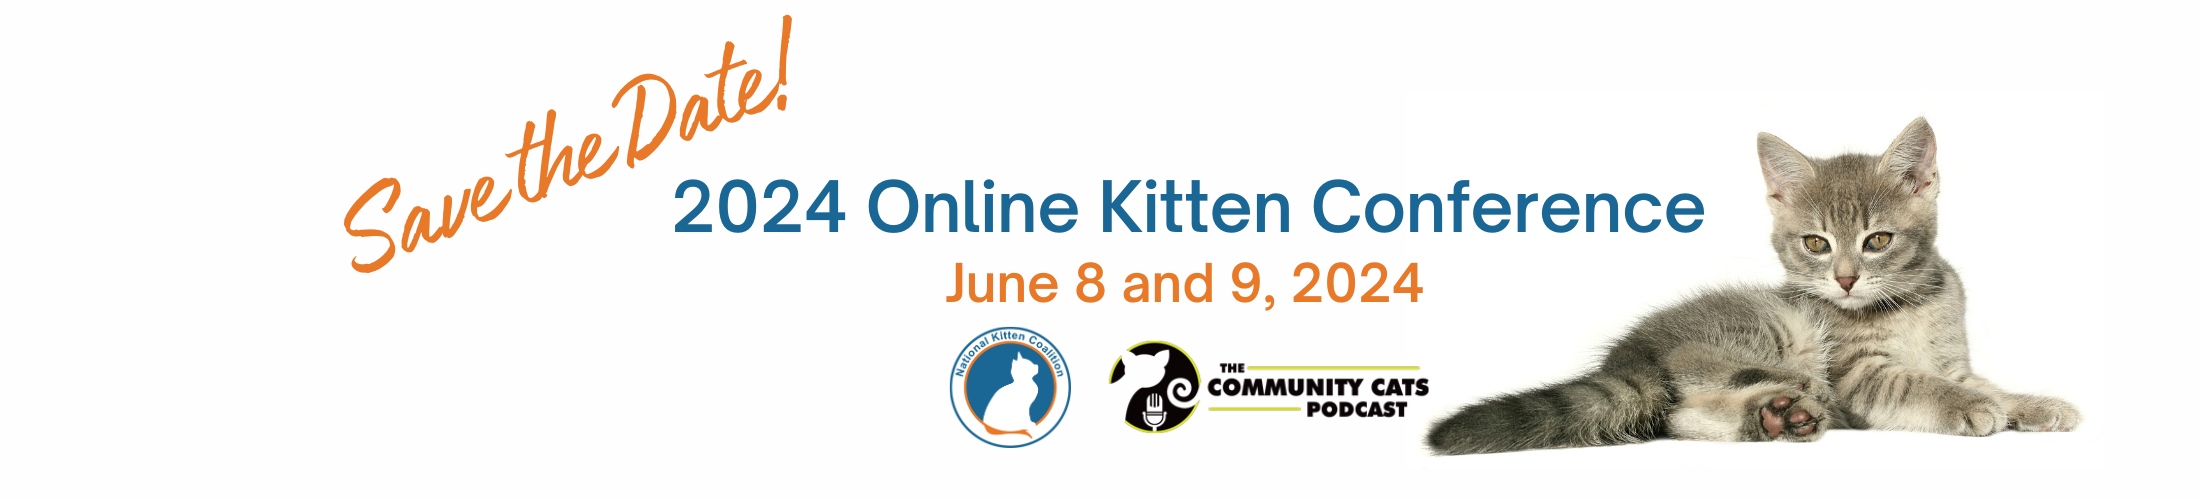 Online Kitten Conference